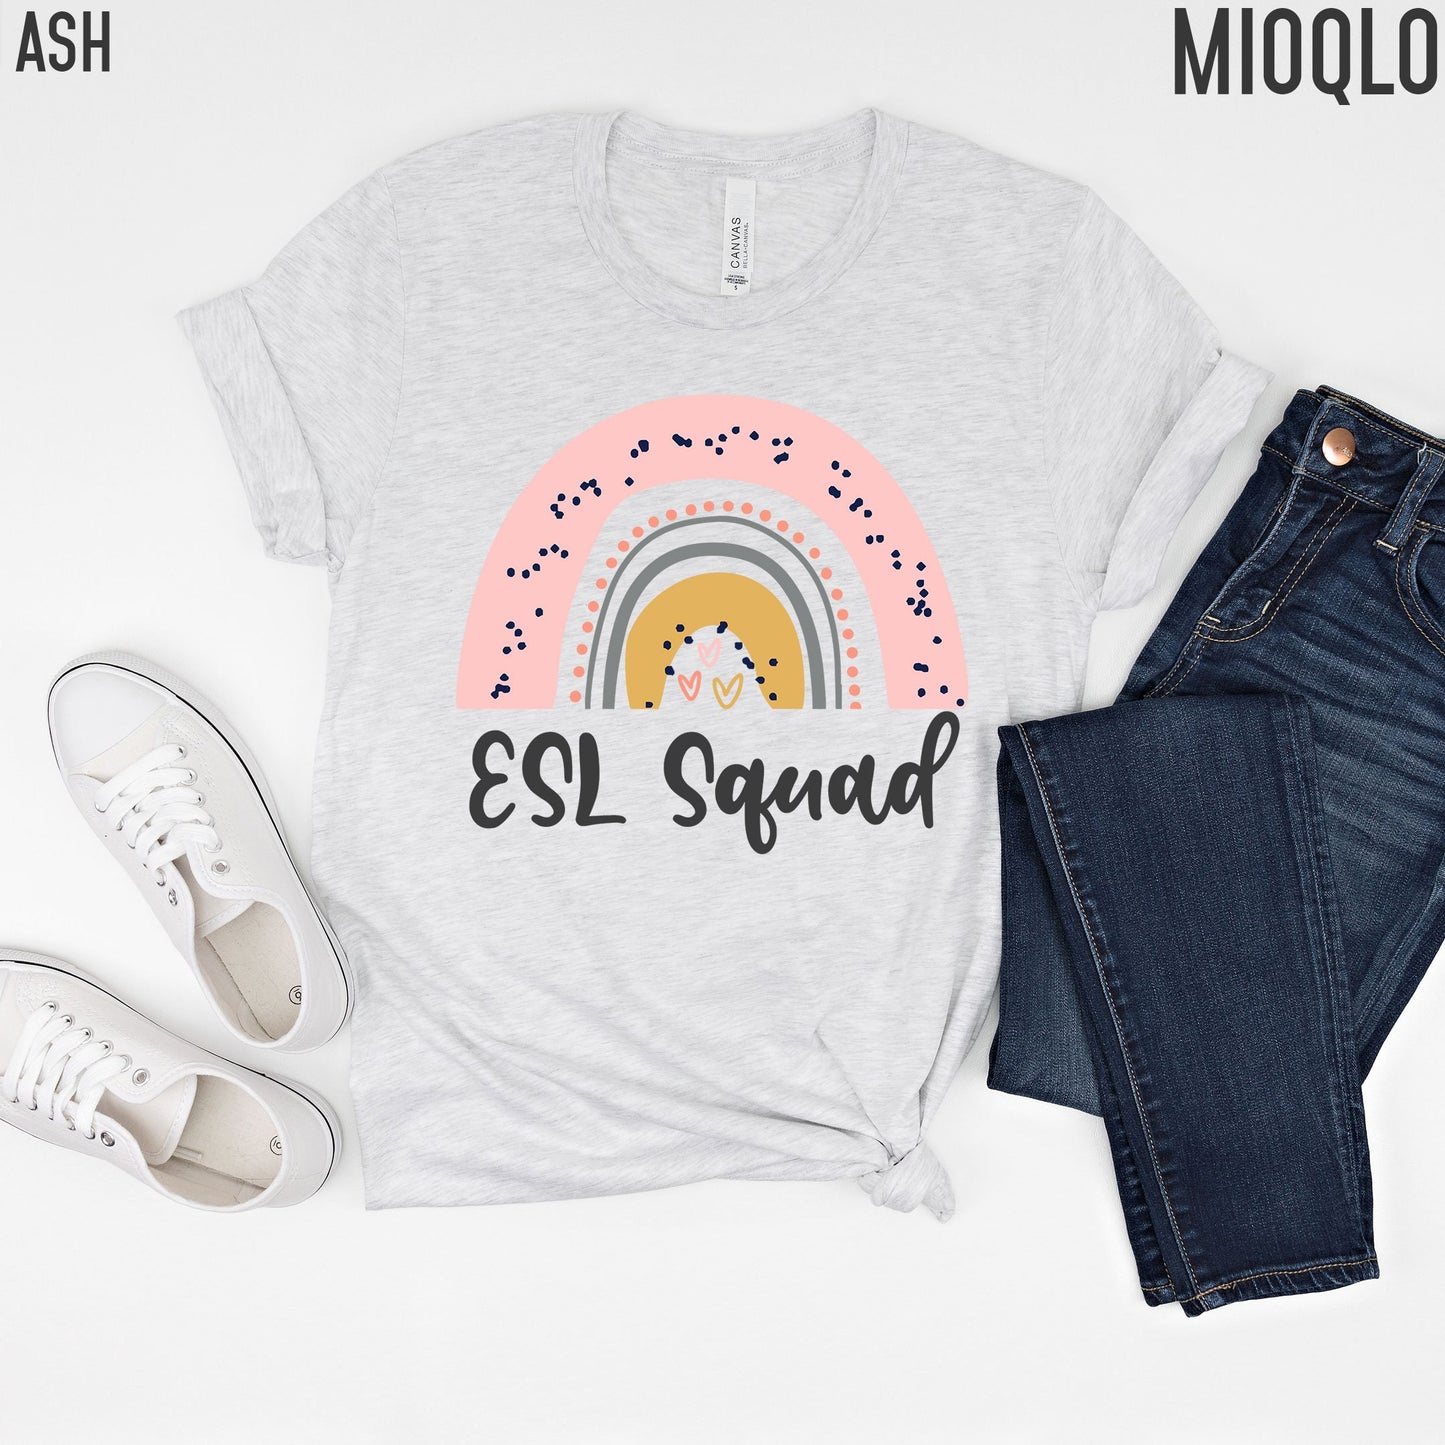 ESL Teacher Shirt, Efl Ell Esol Team Tee, ESL Squad Shirt, English Language Teacher, English Teacher Shirt, Second Language, Maestra Shirt